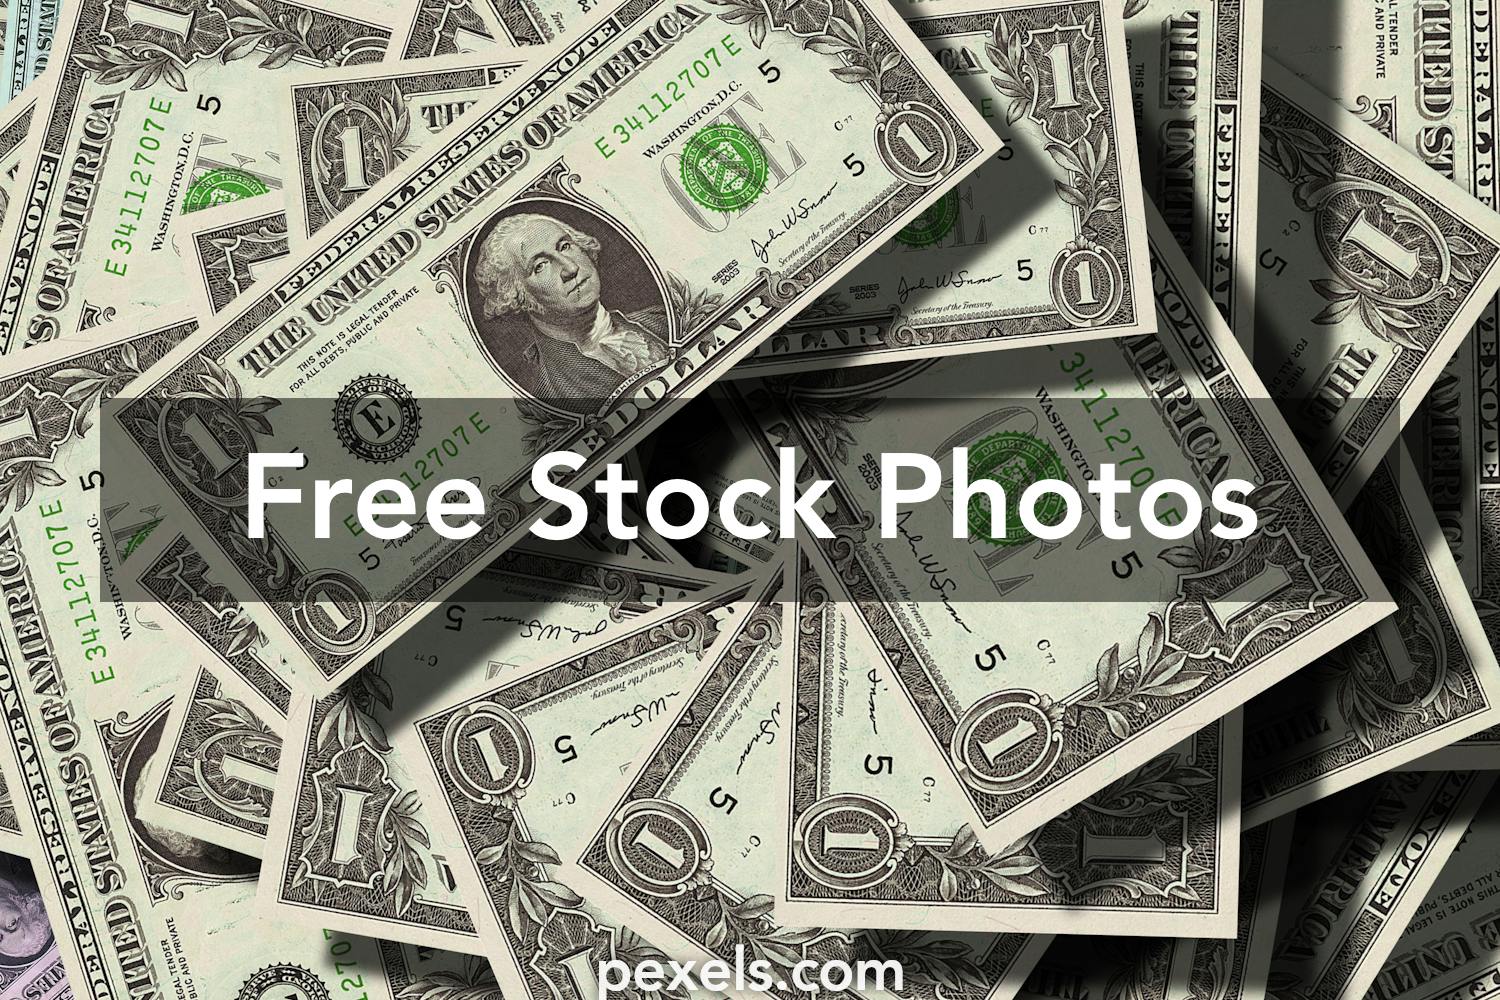 Money Images · Pexels · Free Stock Photos